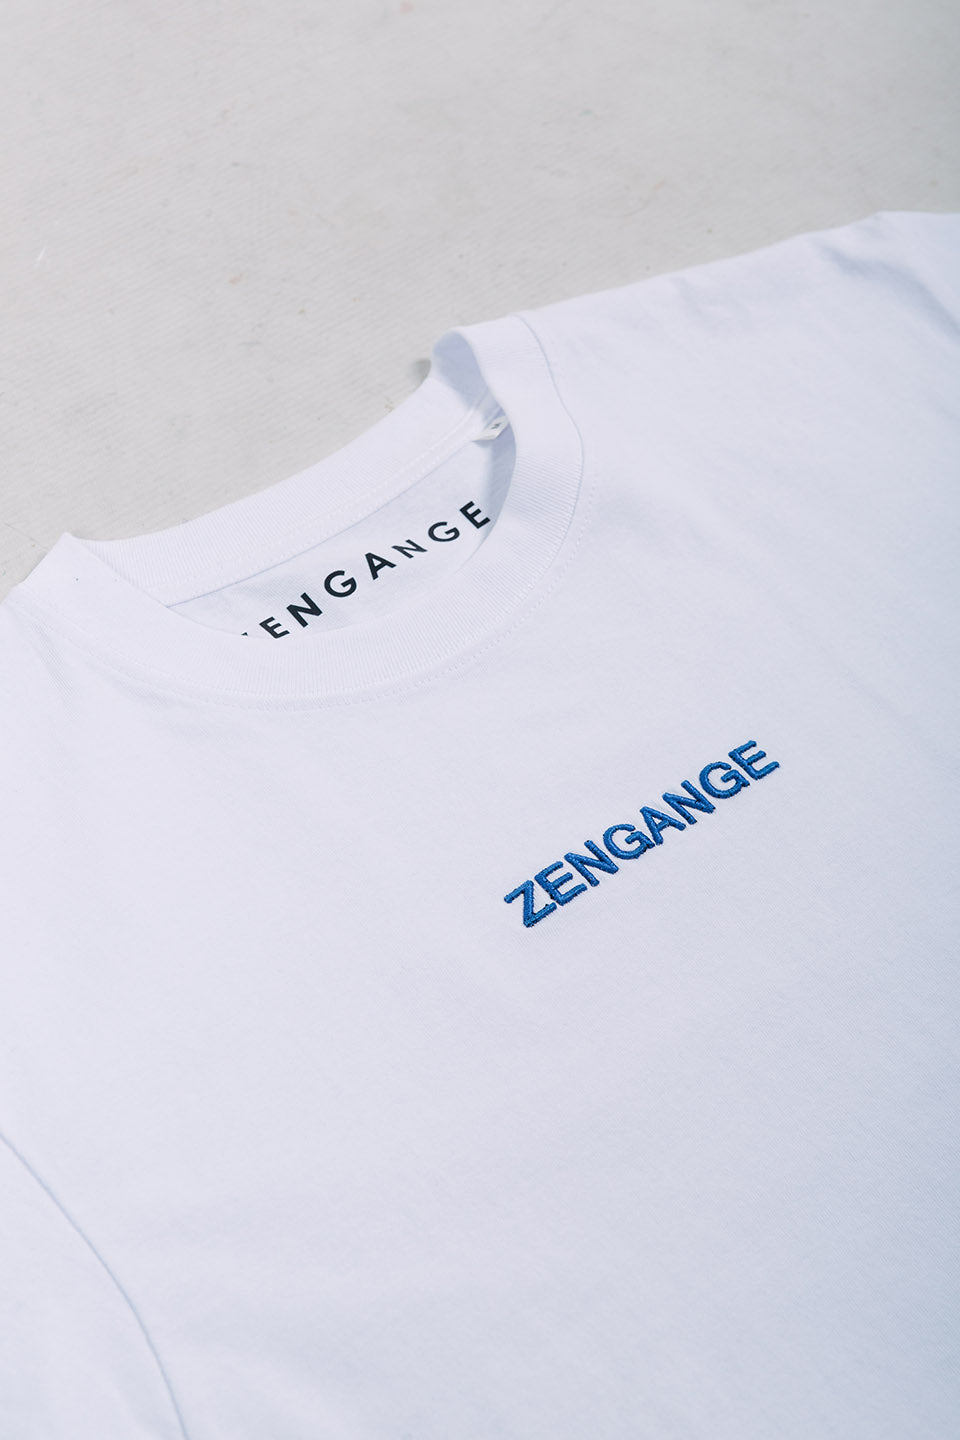 Zengange Premium – White shirt signed by Zengange